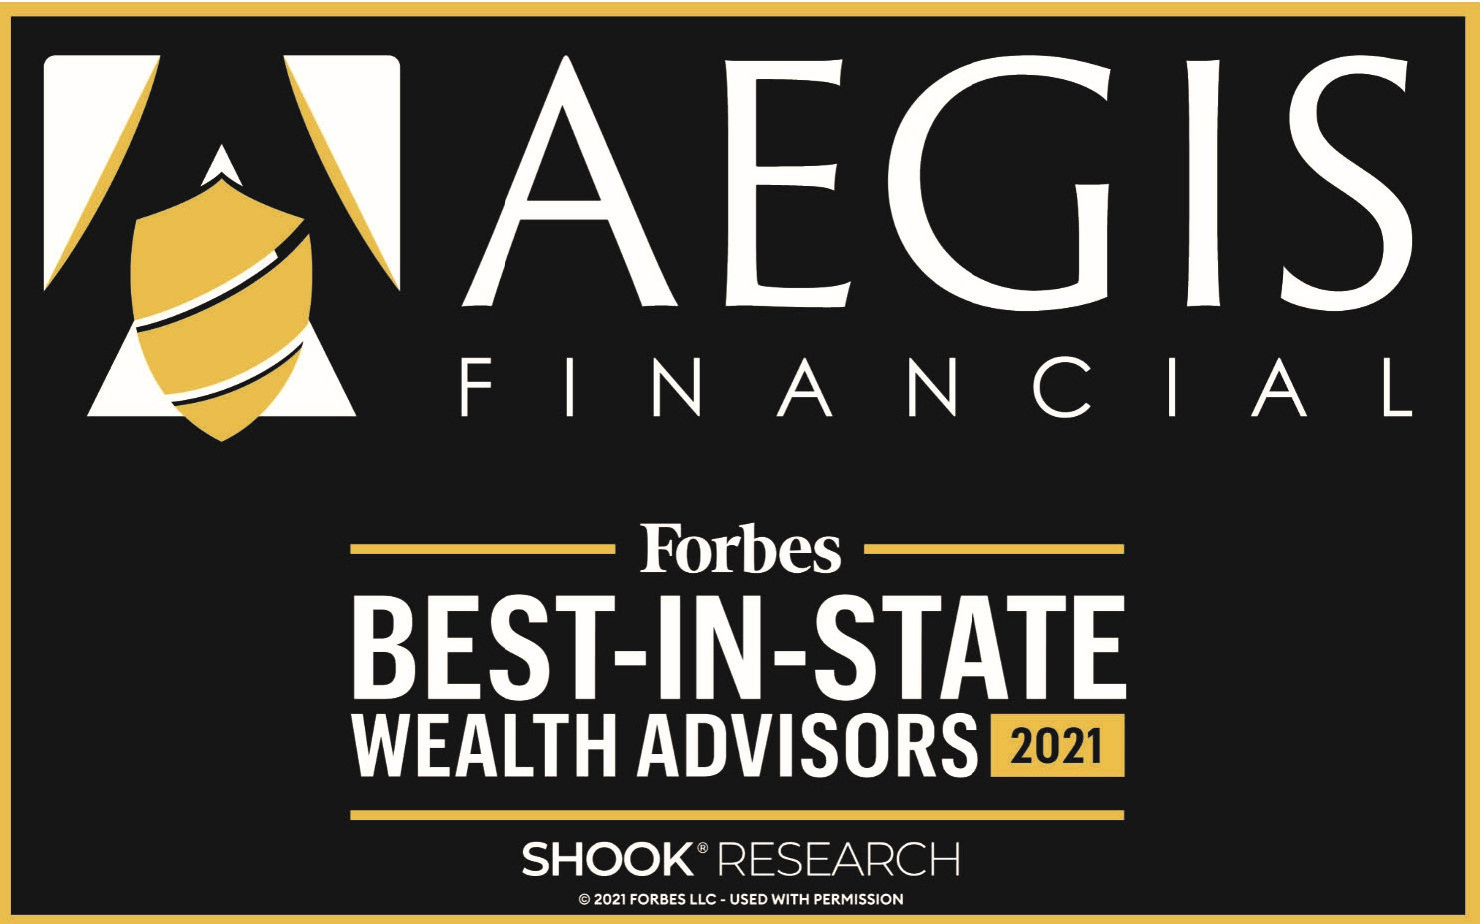 What’s New at AEGIS Financial? | AEGIScoop